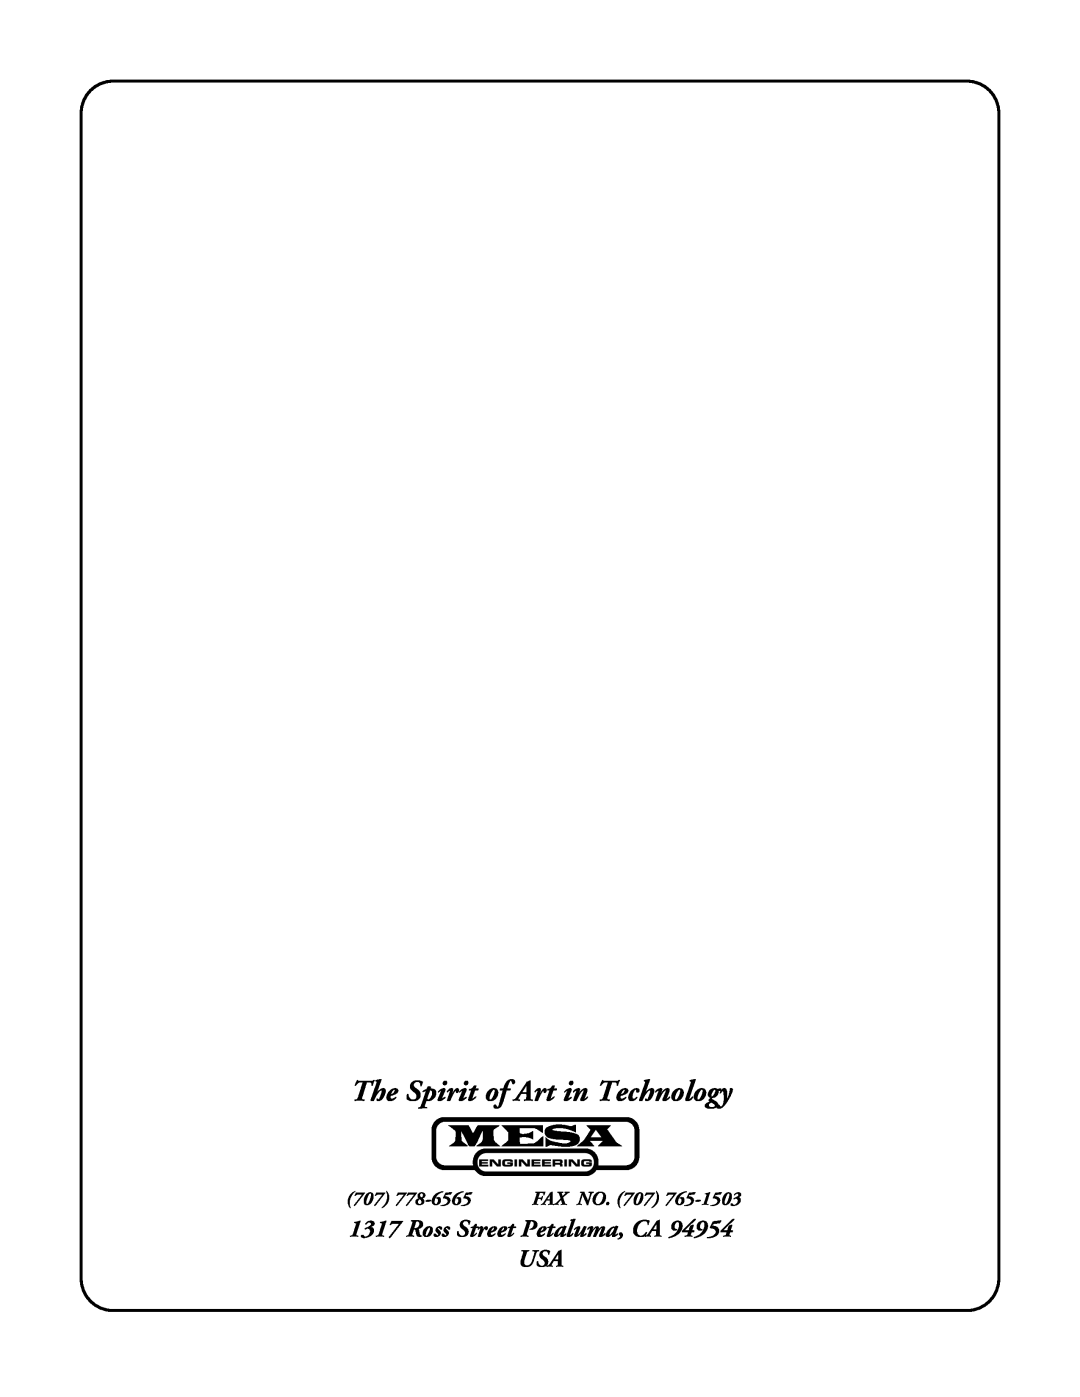 Mesa/Boogie Rectifier Stereo owner manual The Spirit of Art in Technology, Ross Street Petaluma, CA USA, 707 778-6565FAX NO 